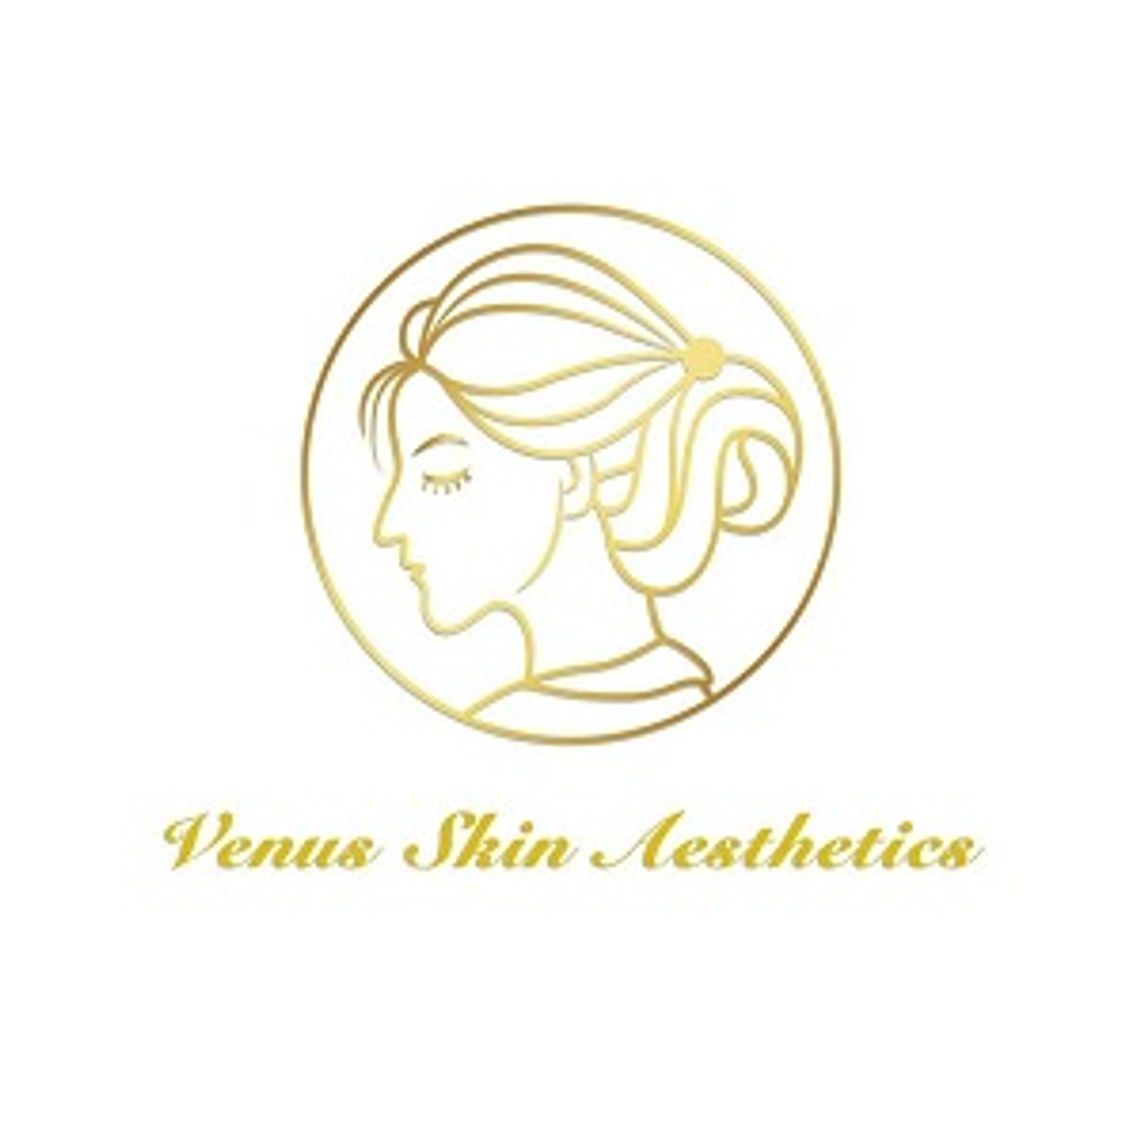 Venus Skin Aesthetic